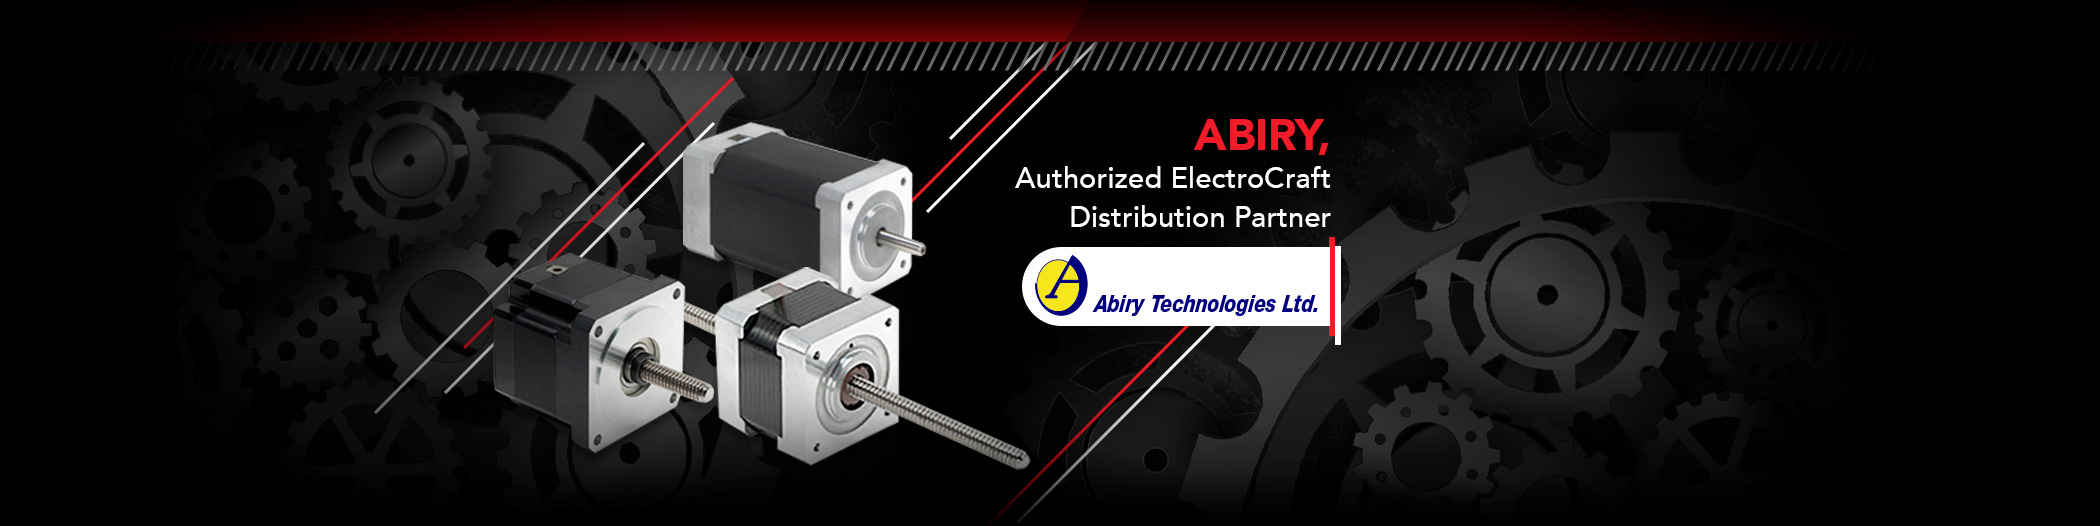 Authorized ElectroCraft Distribution Partner: Abiry Technologies Ltd.